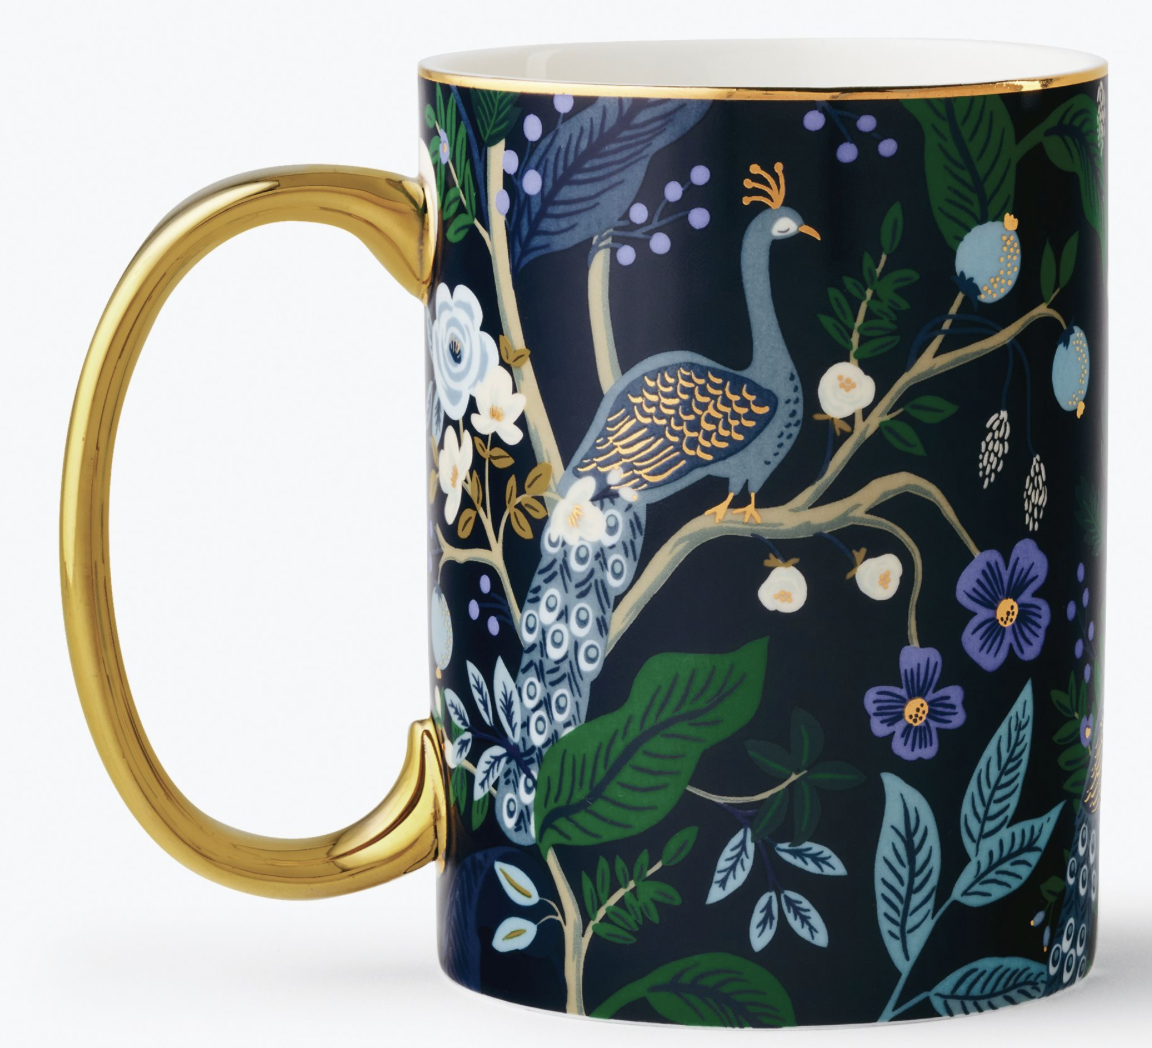 Peacock Porcelain Mug